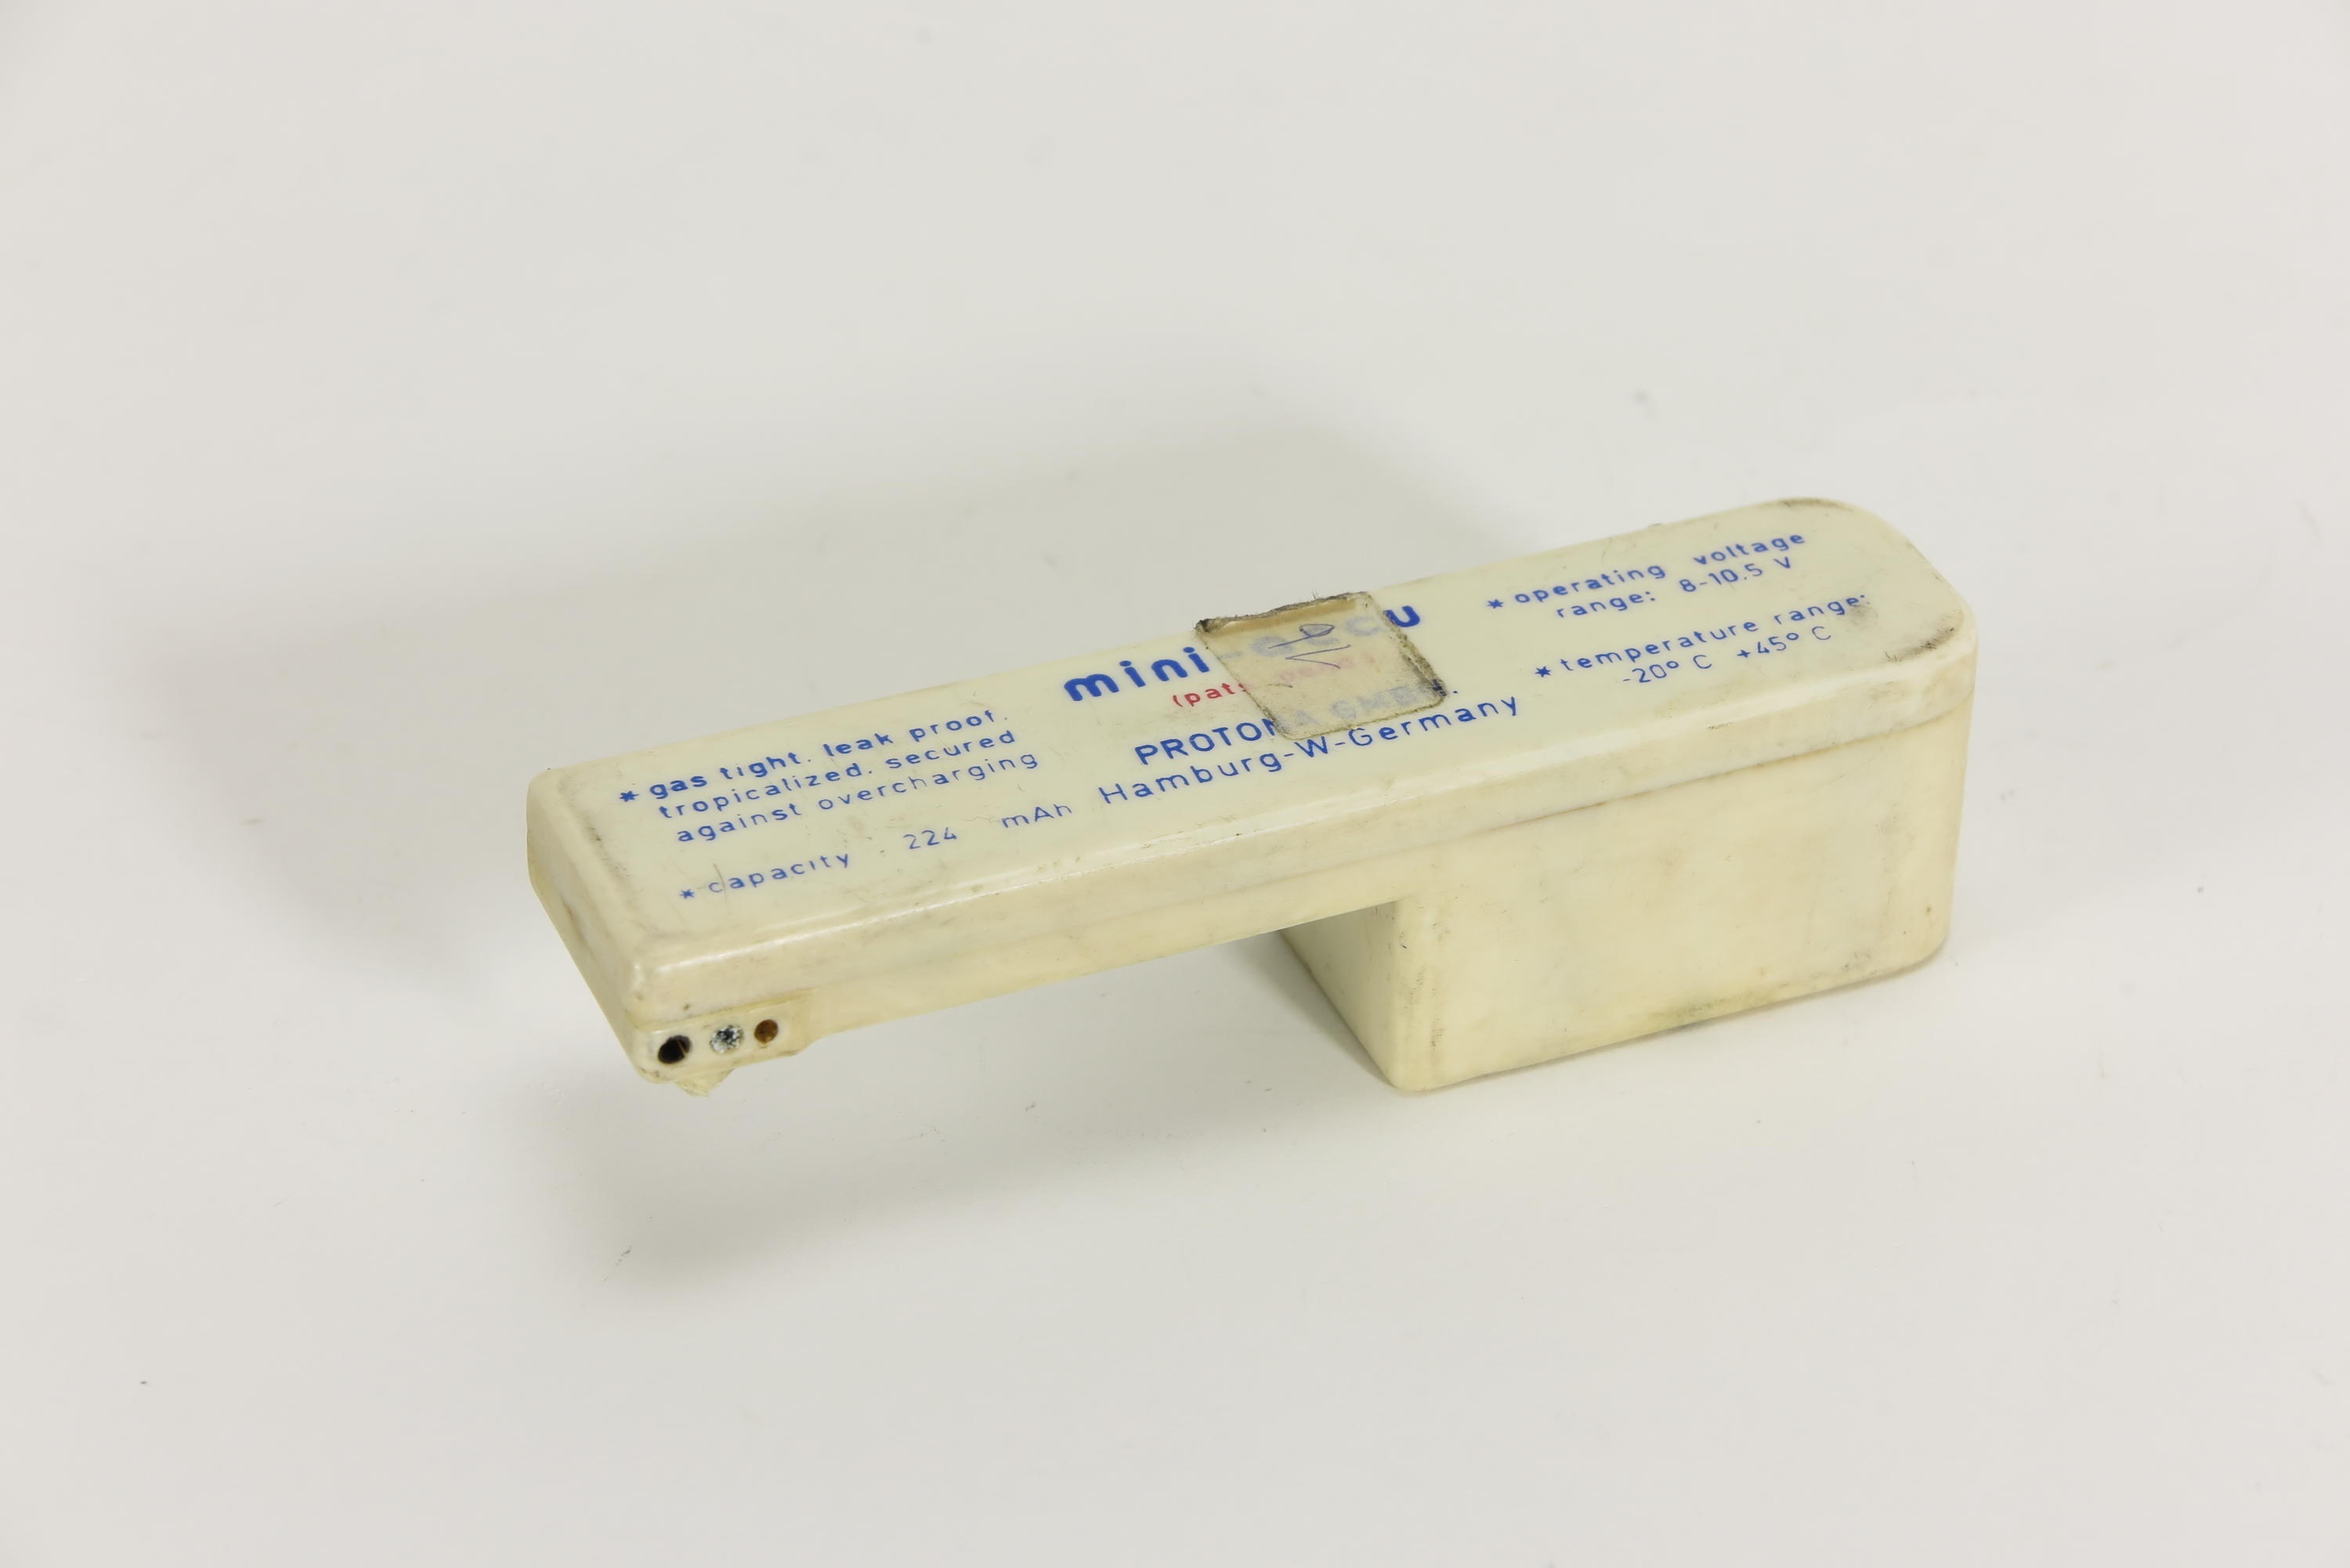 Zubehör zu Protona Minifon, mini-accu (Deutsches Technikmuseum CC BY)